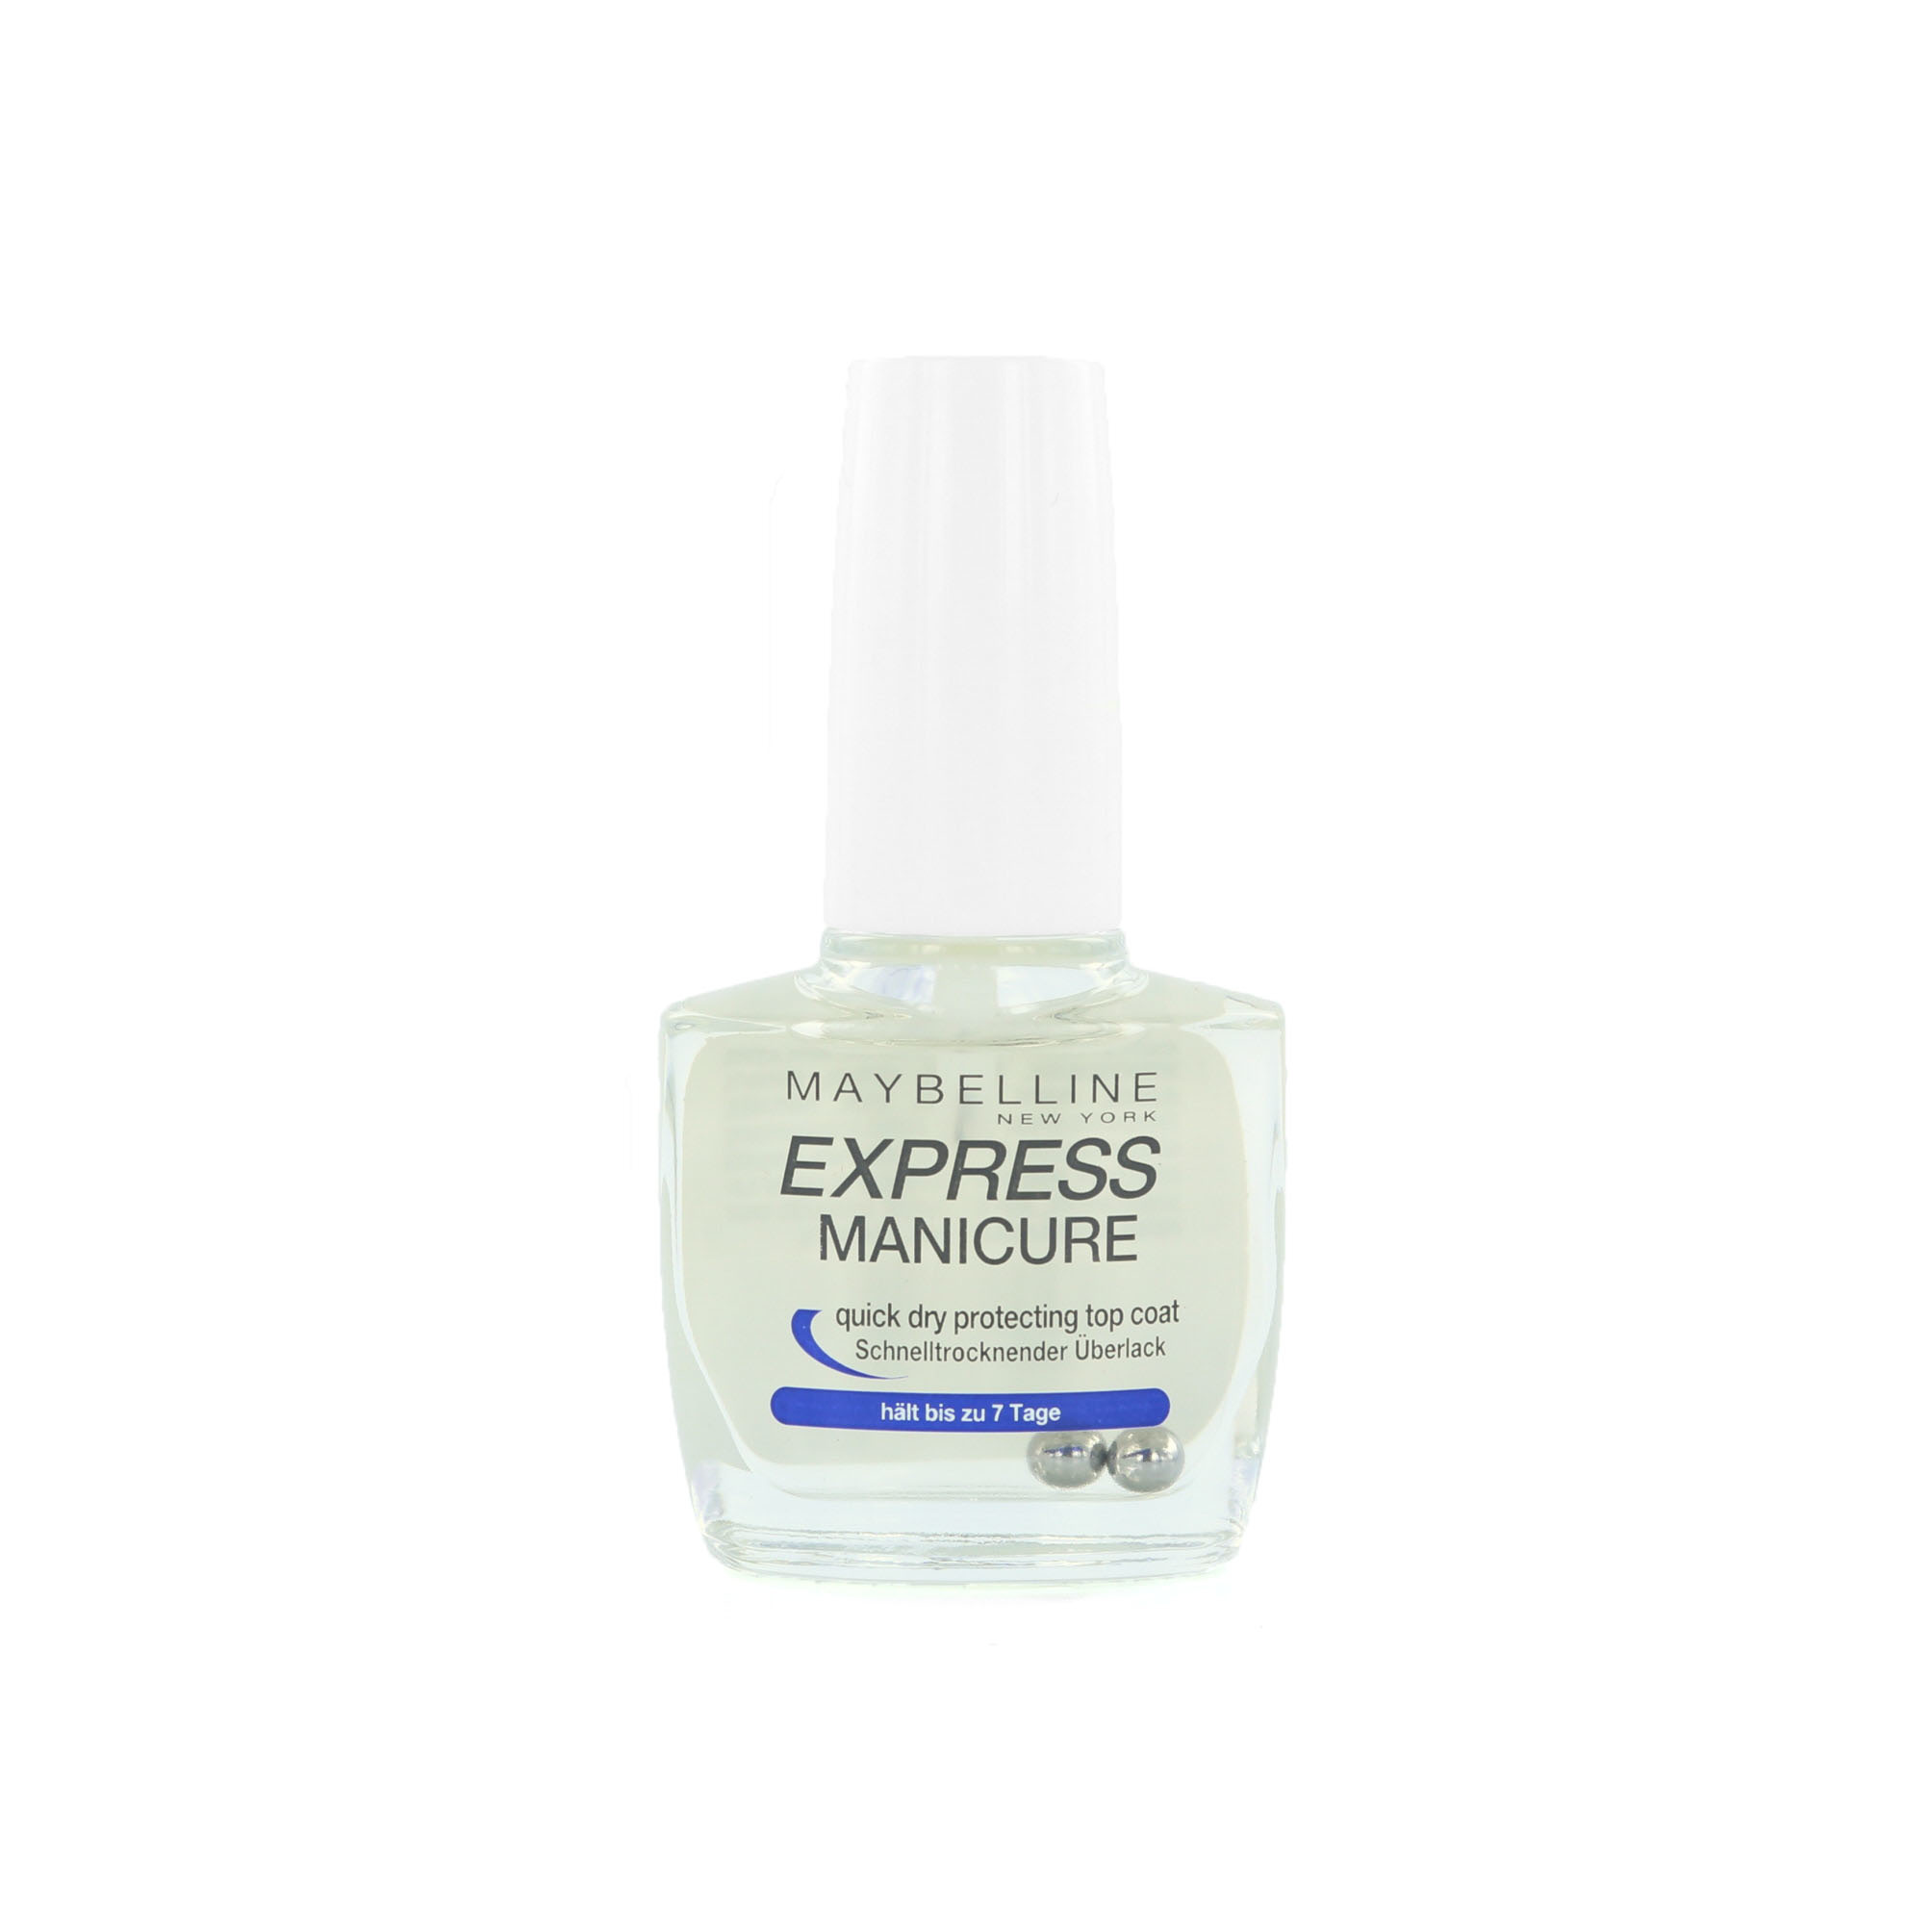 Maybelline Express Manicure bij Blisso kopen online Topcoat